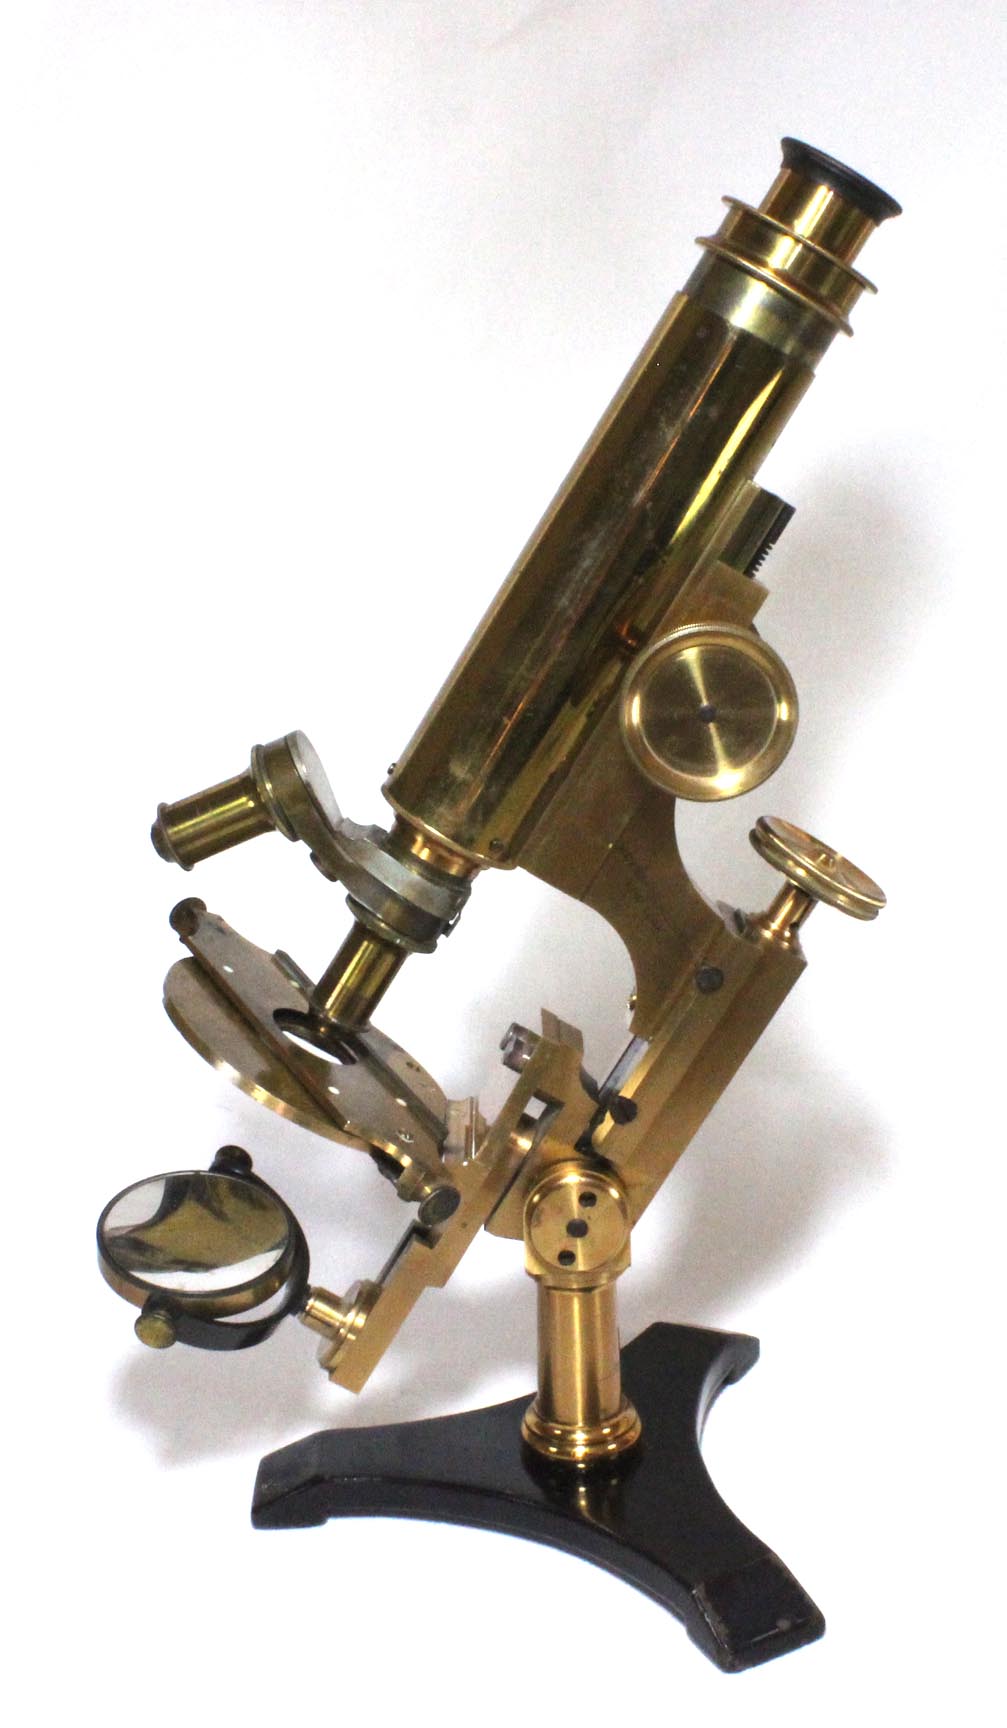 Bulloch New Student Microscope